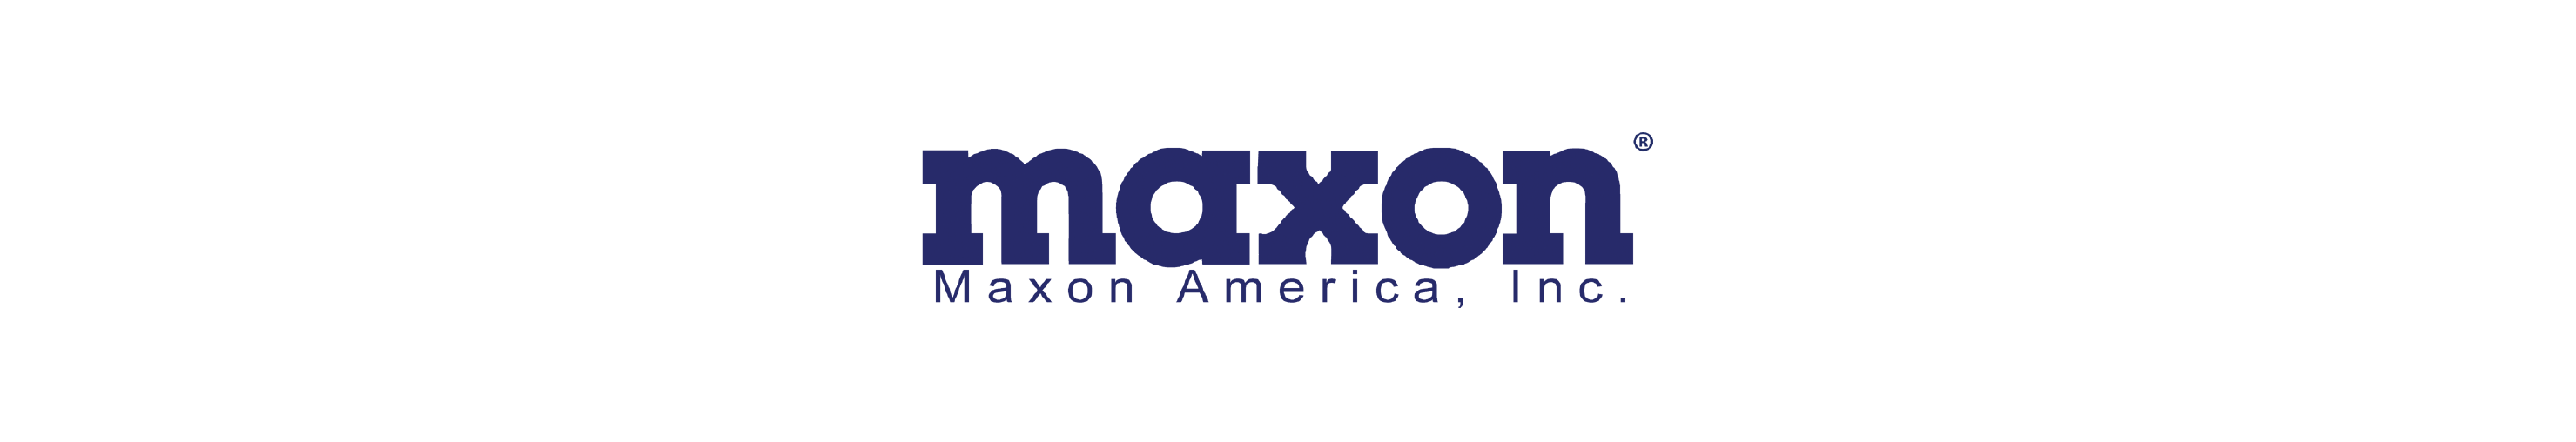 Maxon America Inc. logo